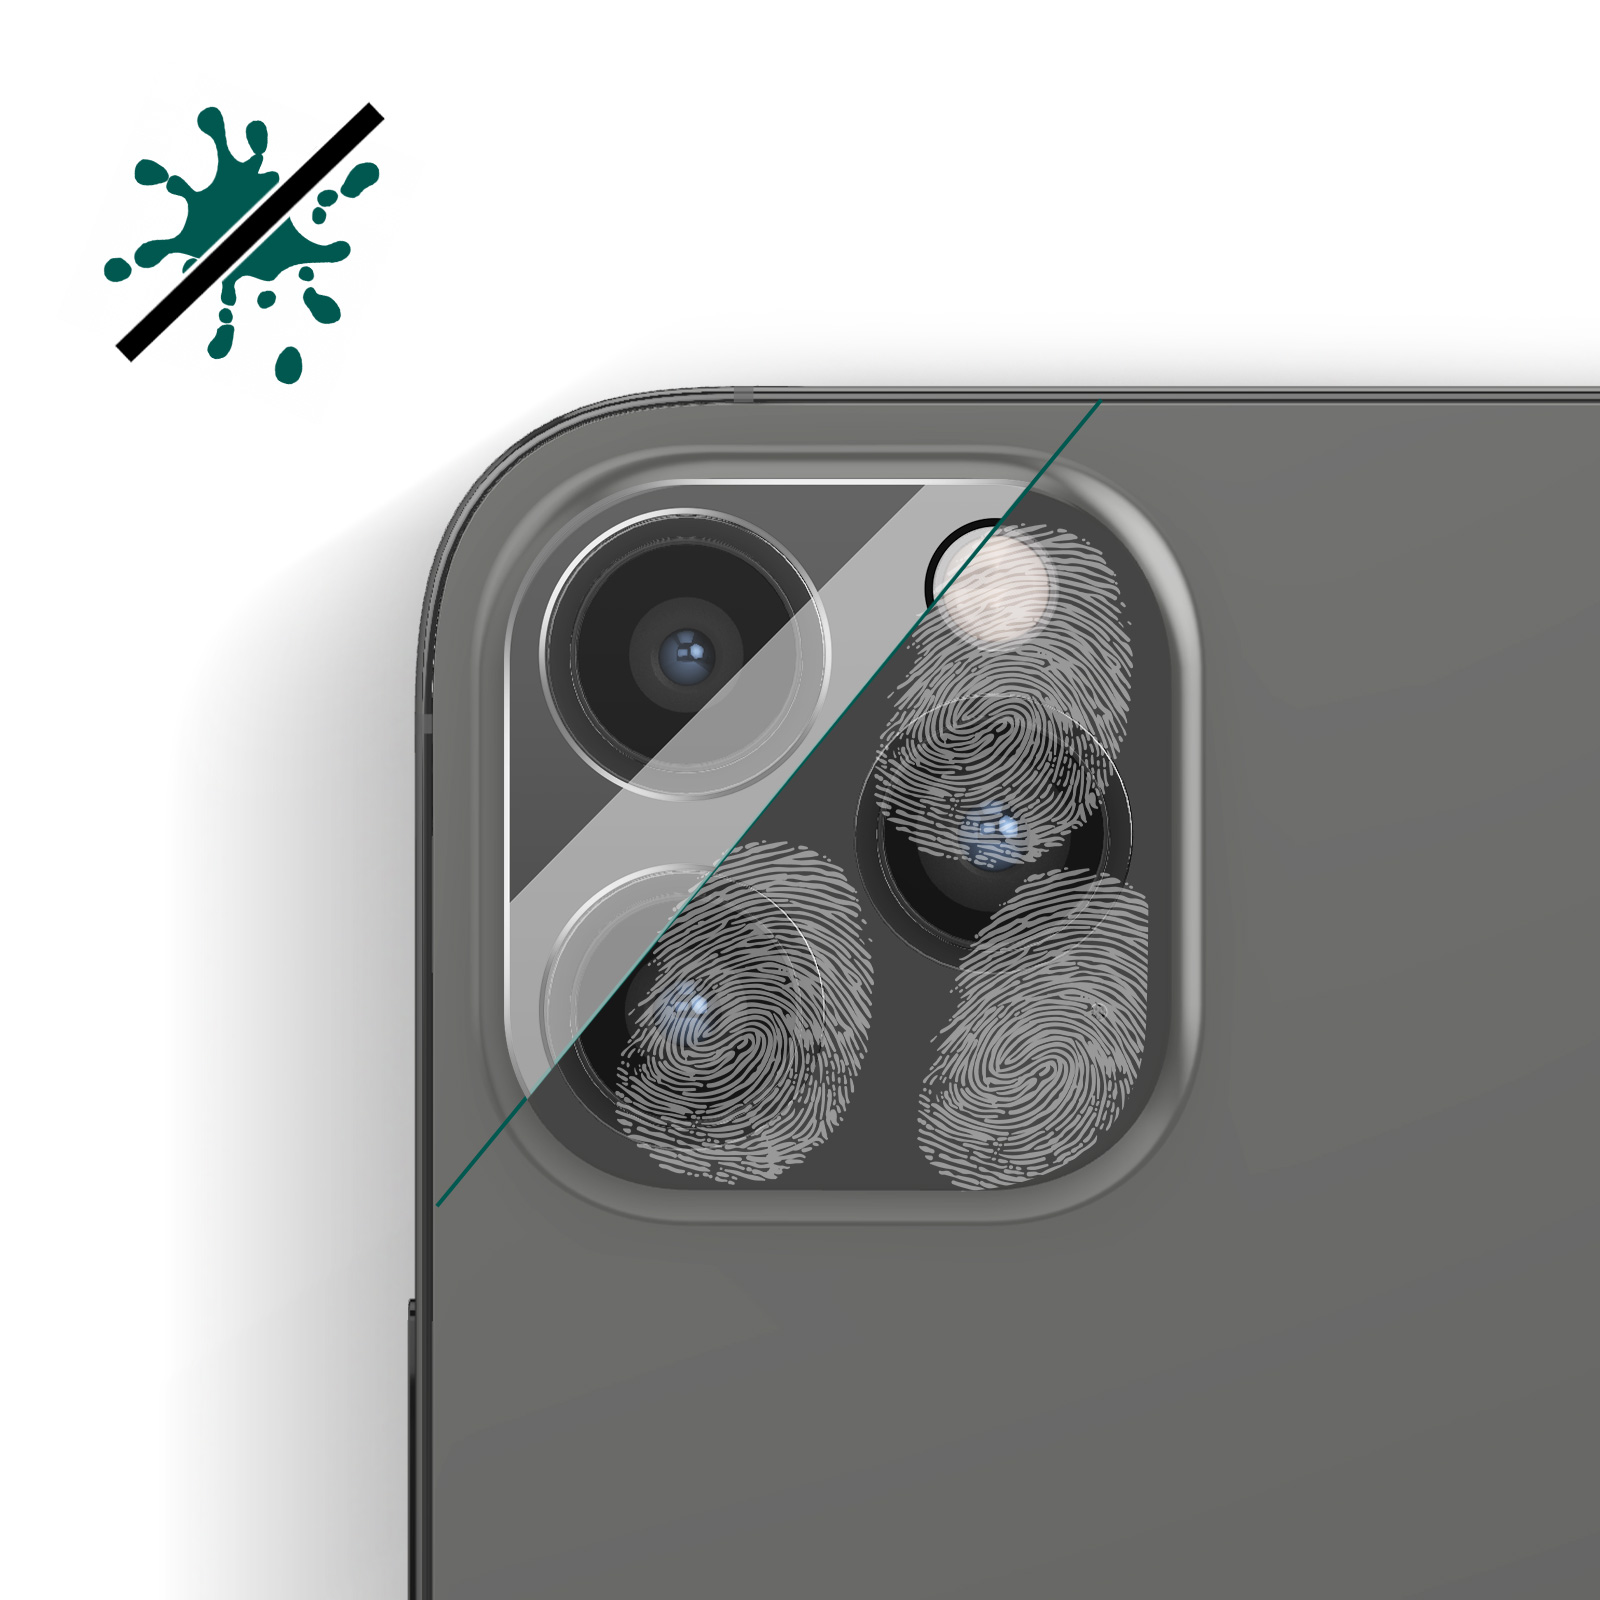 Protection Caméra IPhone 12 pro max - verre - transparent